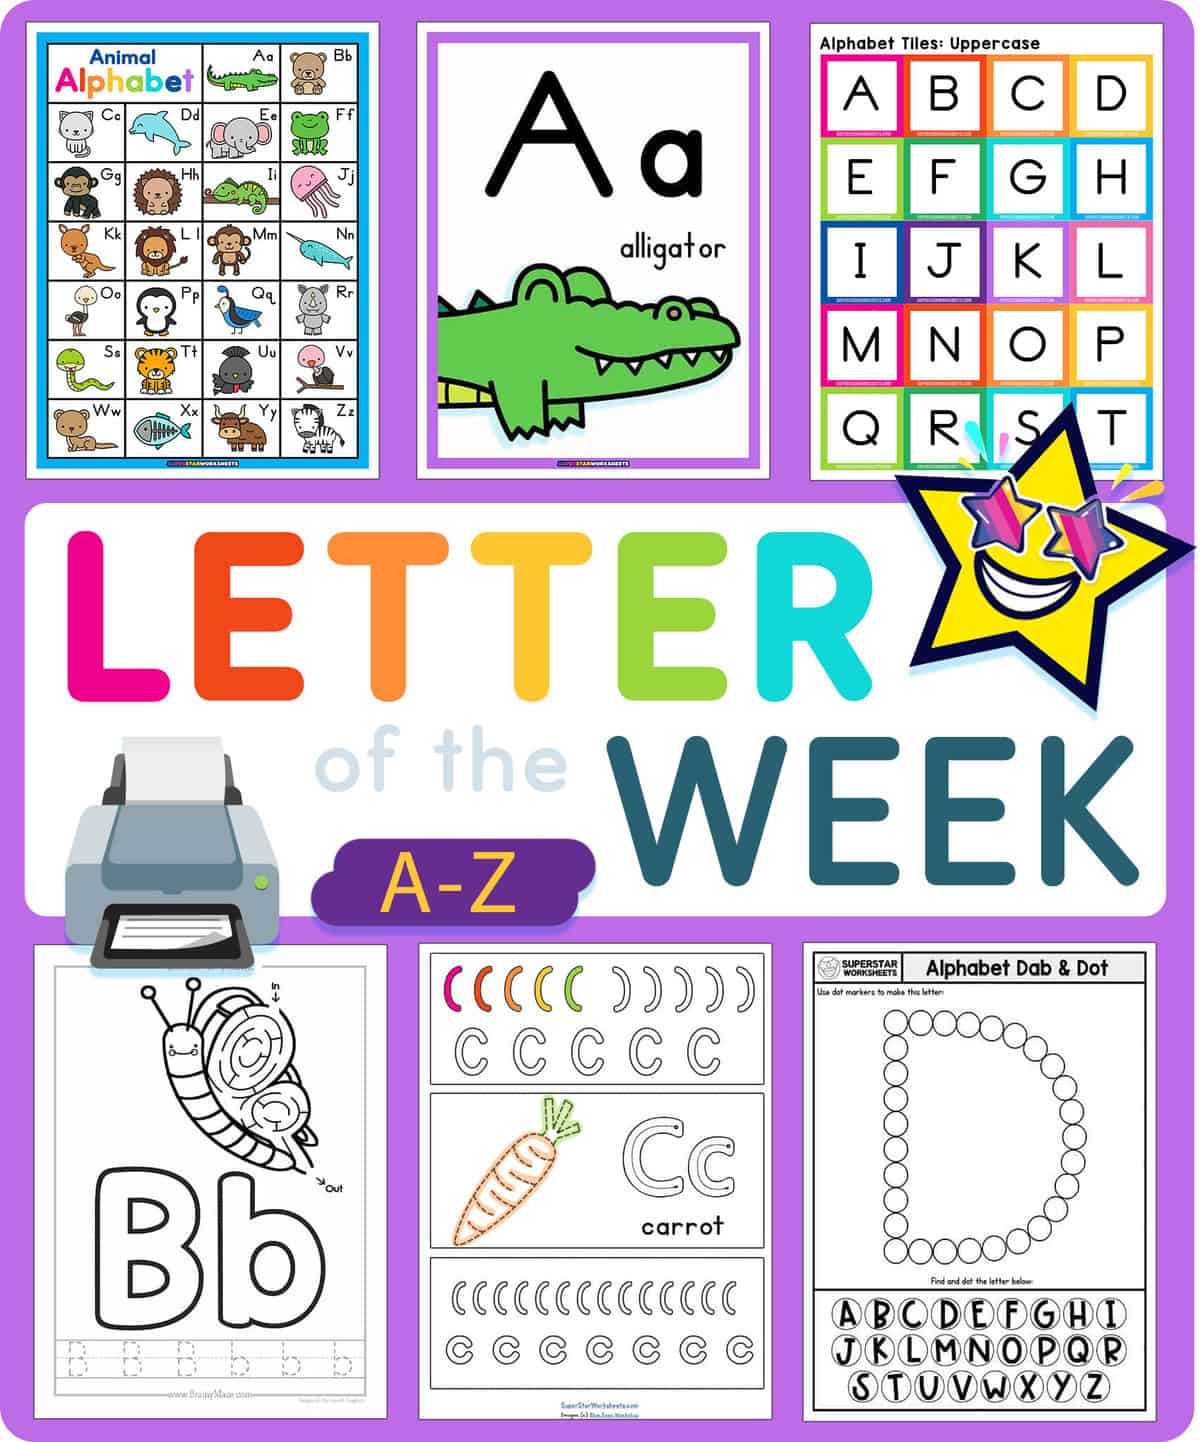 Kindergarten Word Wall Printable Alphabet for Kids - Life Over C's